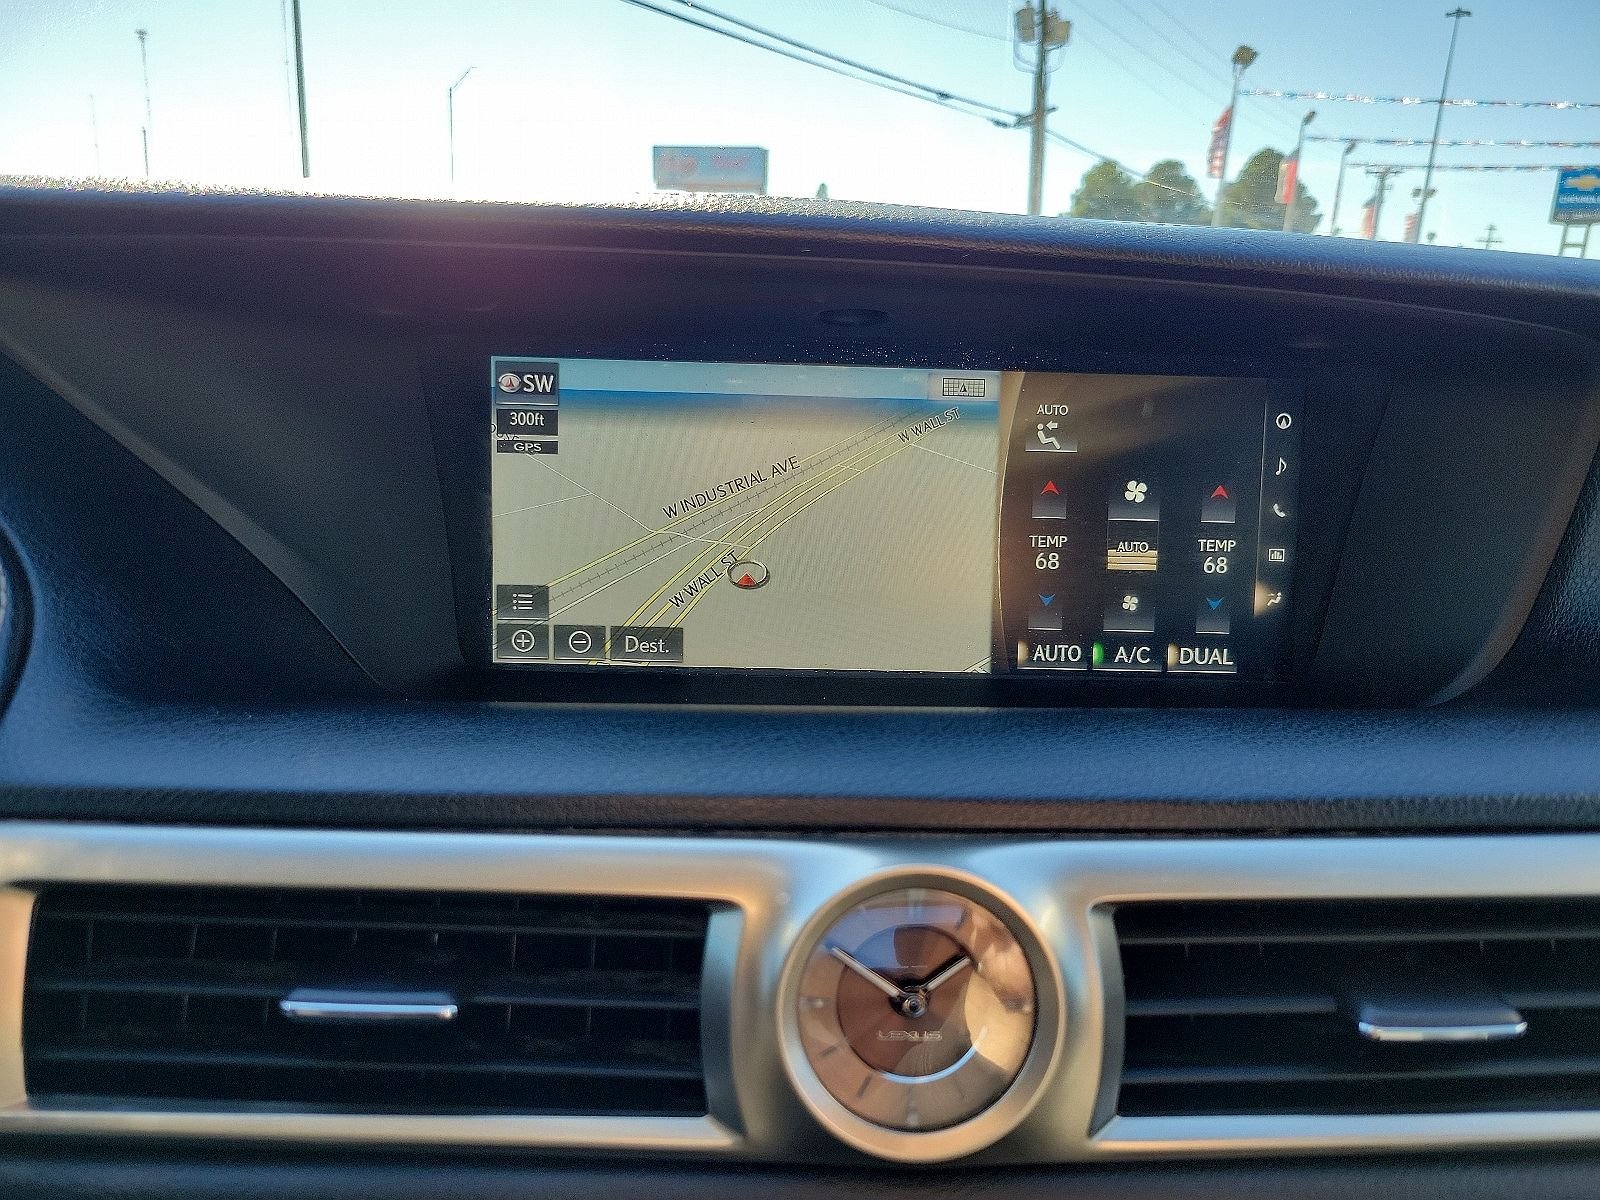 2016 Lexus GS 200t image 18